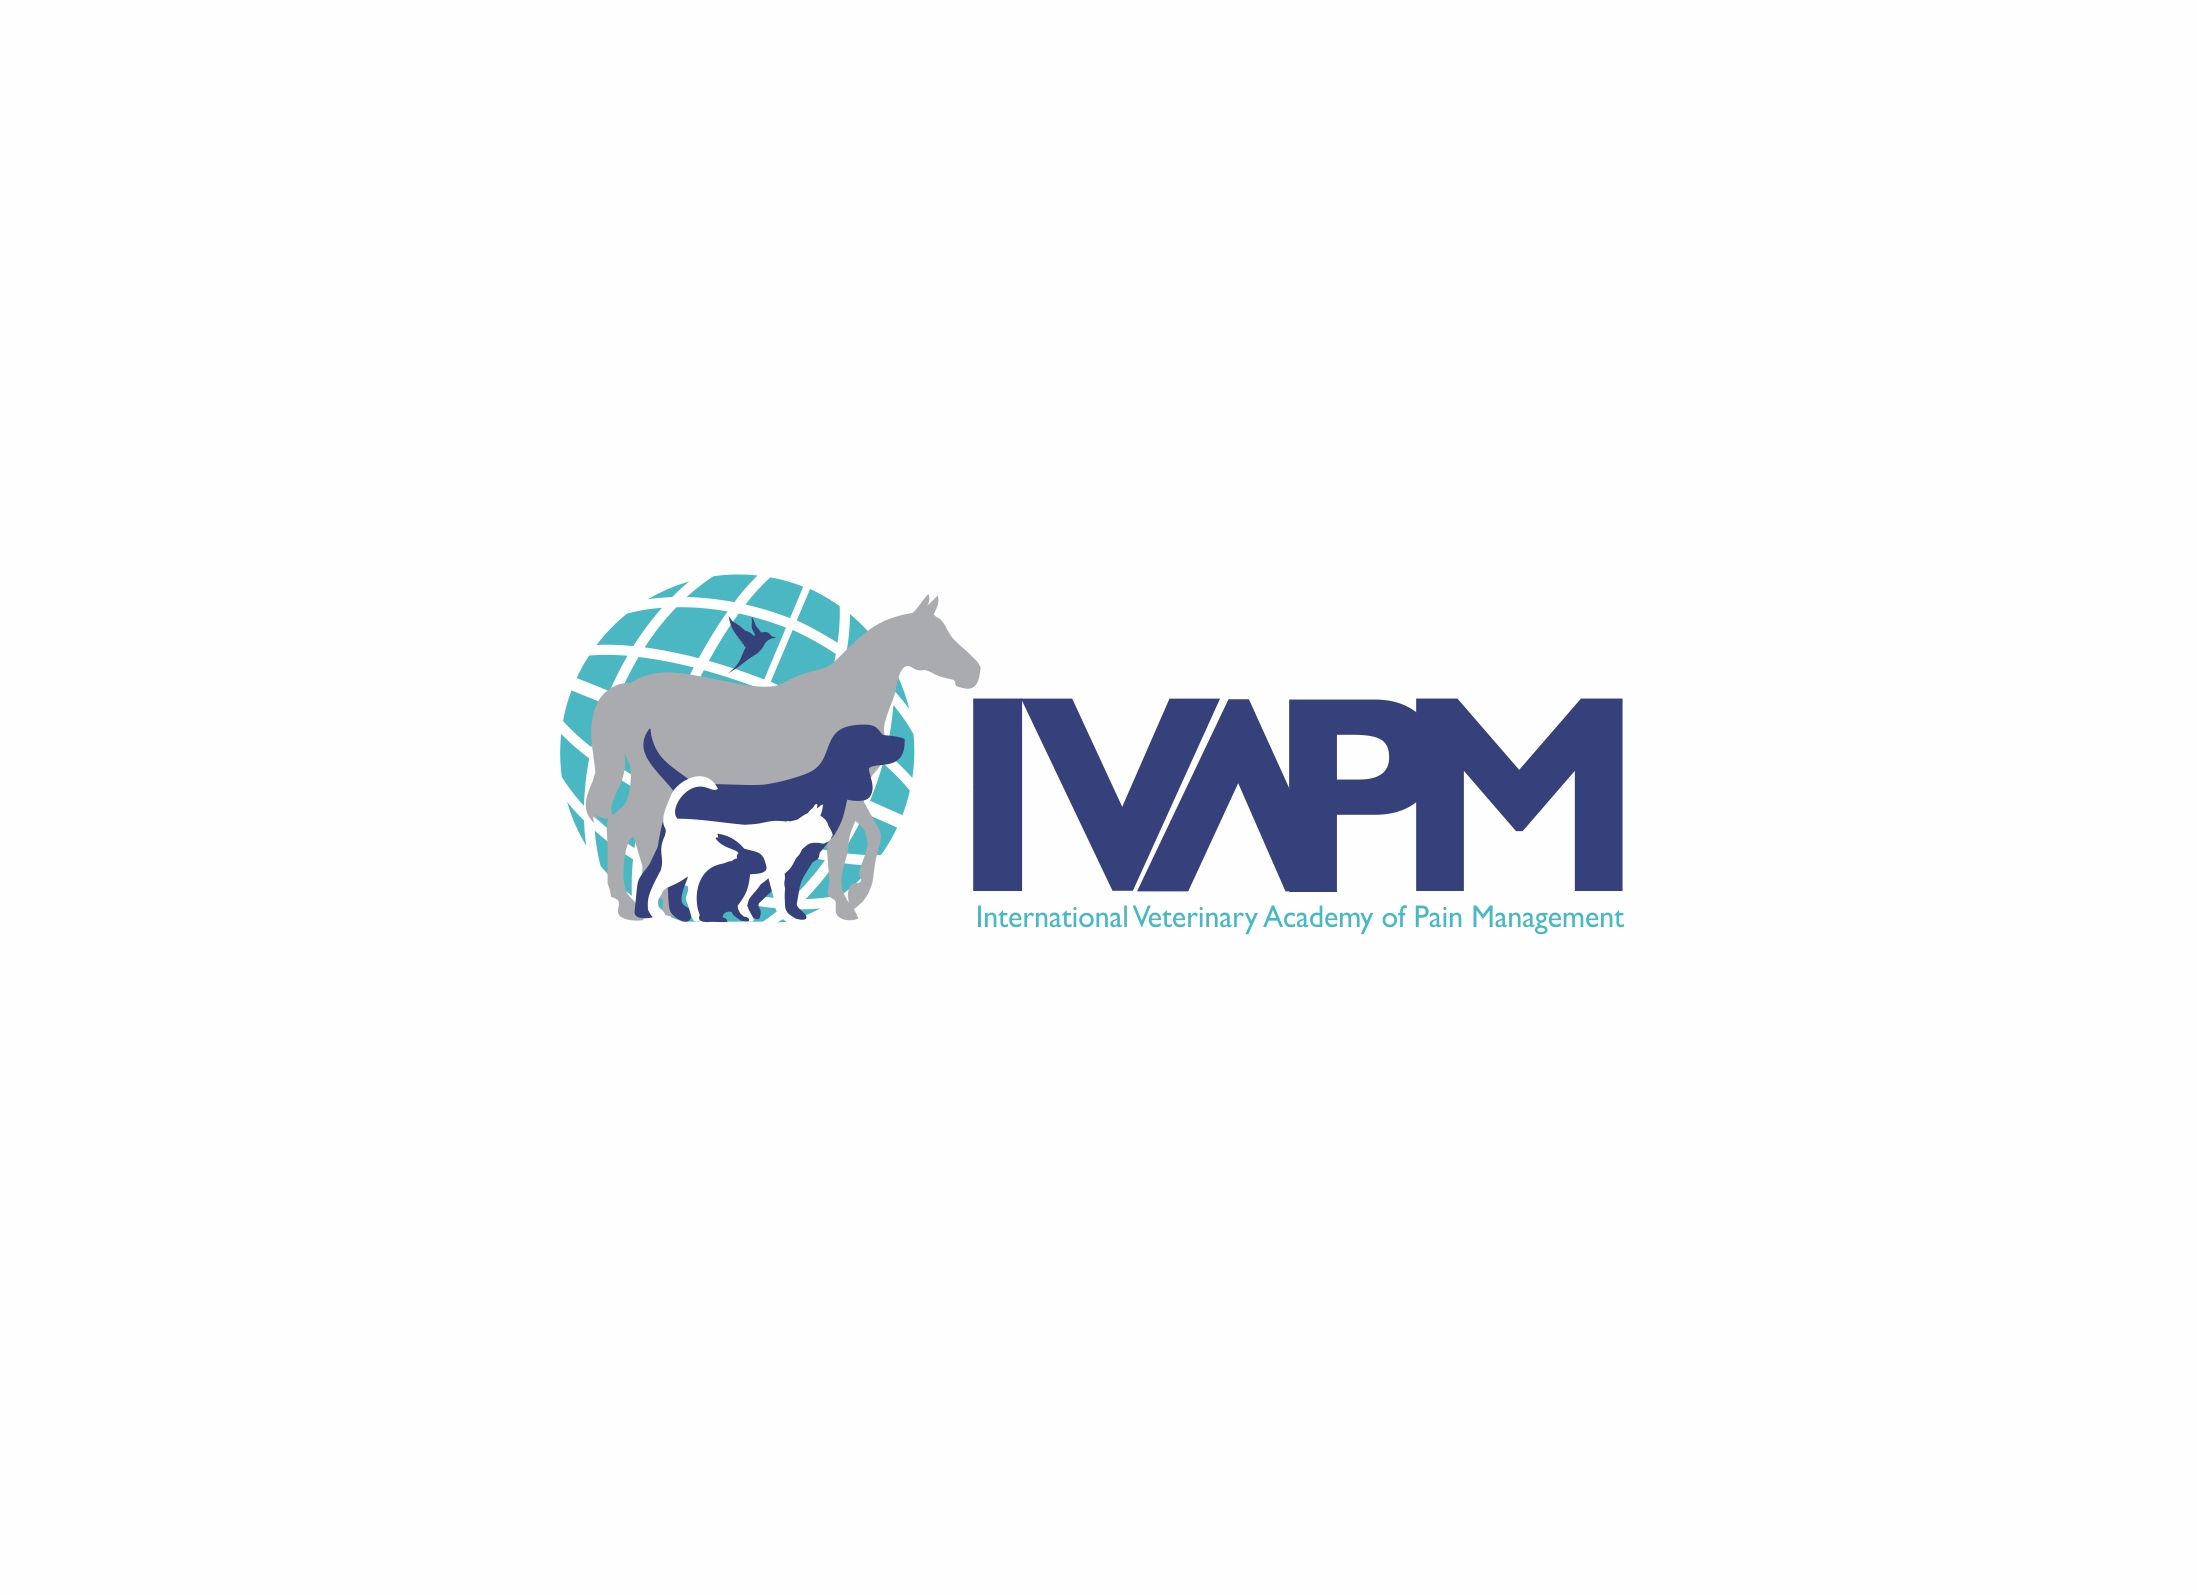 International Veterinary Academy of Pain Management (IVAPM) logo